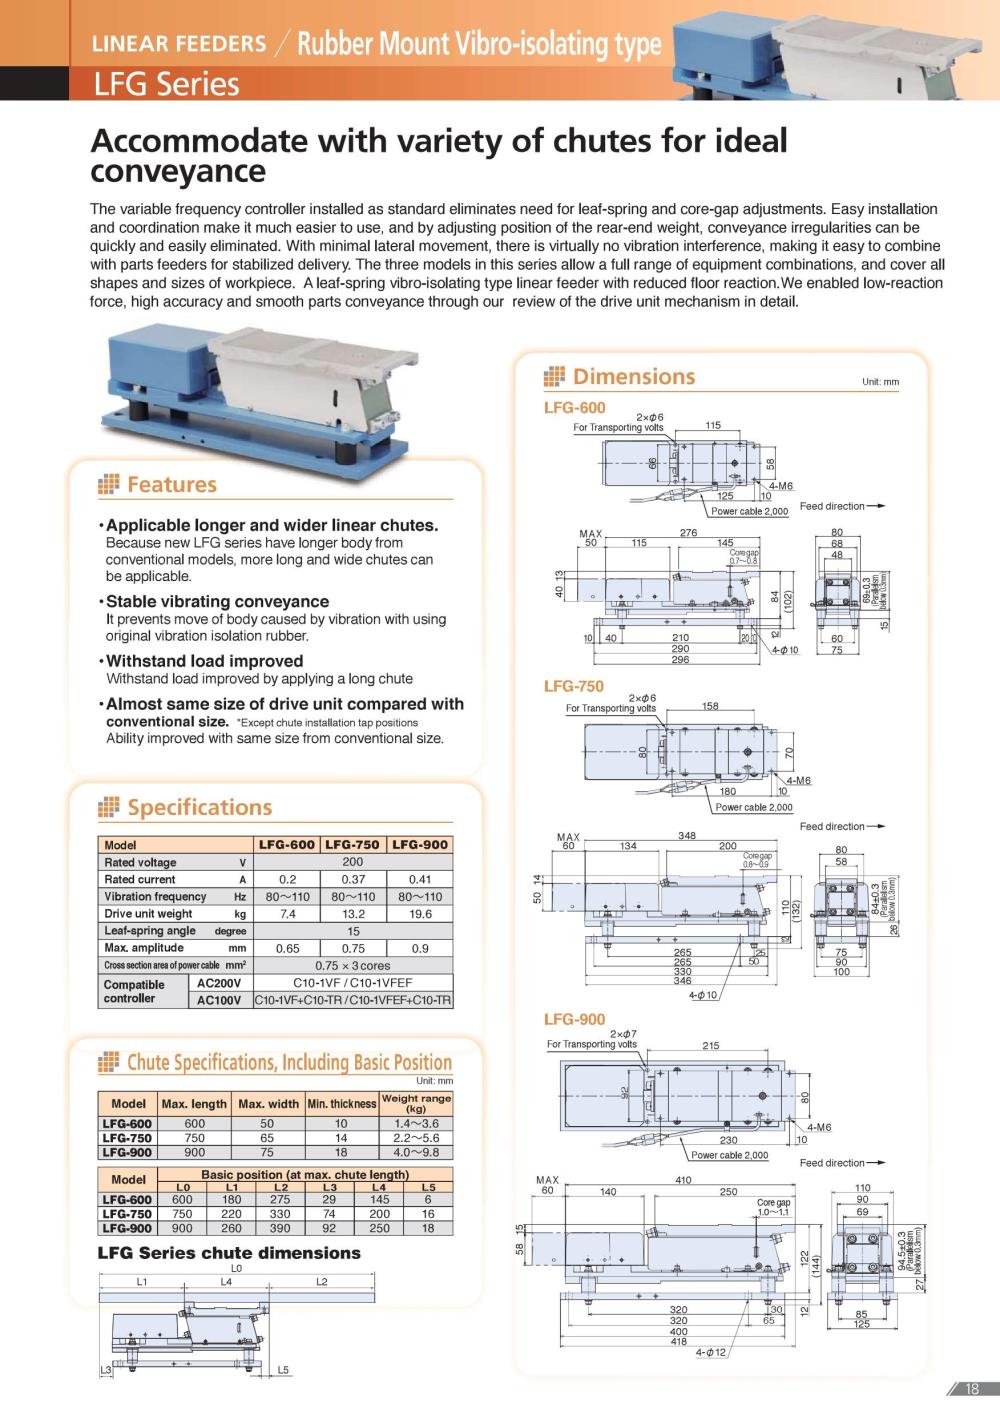 SINFONIA Drive Unit for Linear Feeder LFG-900B, 200V